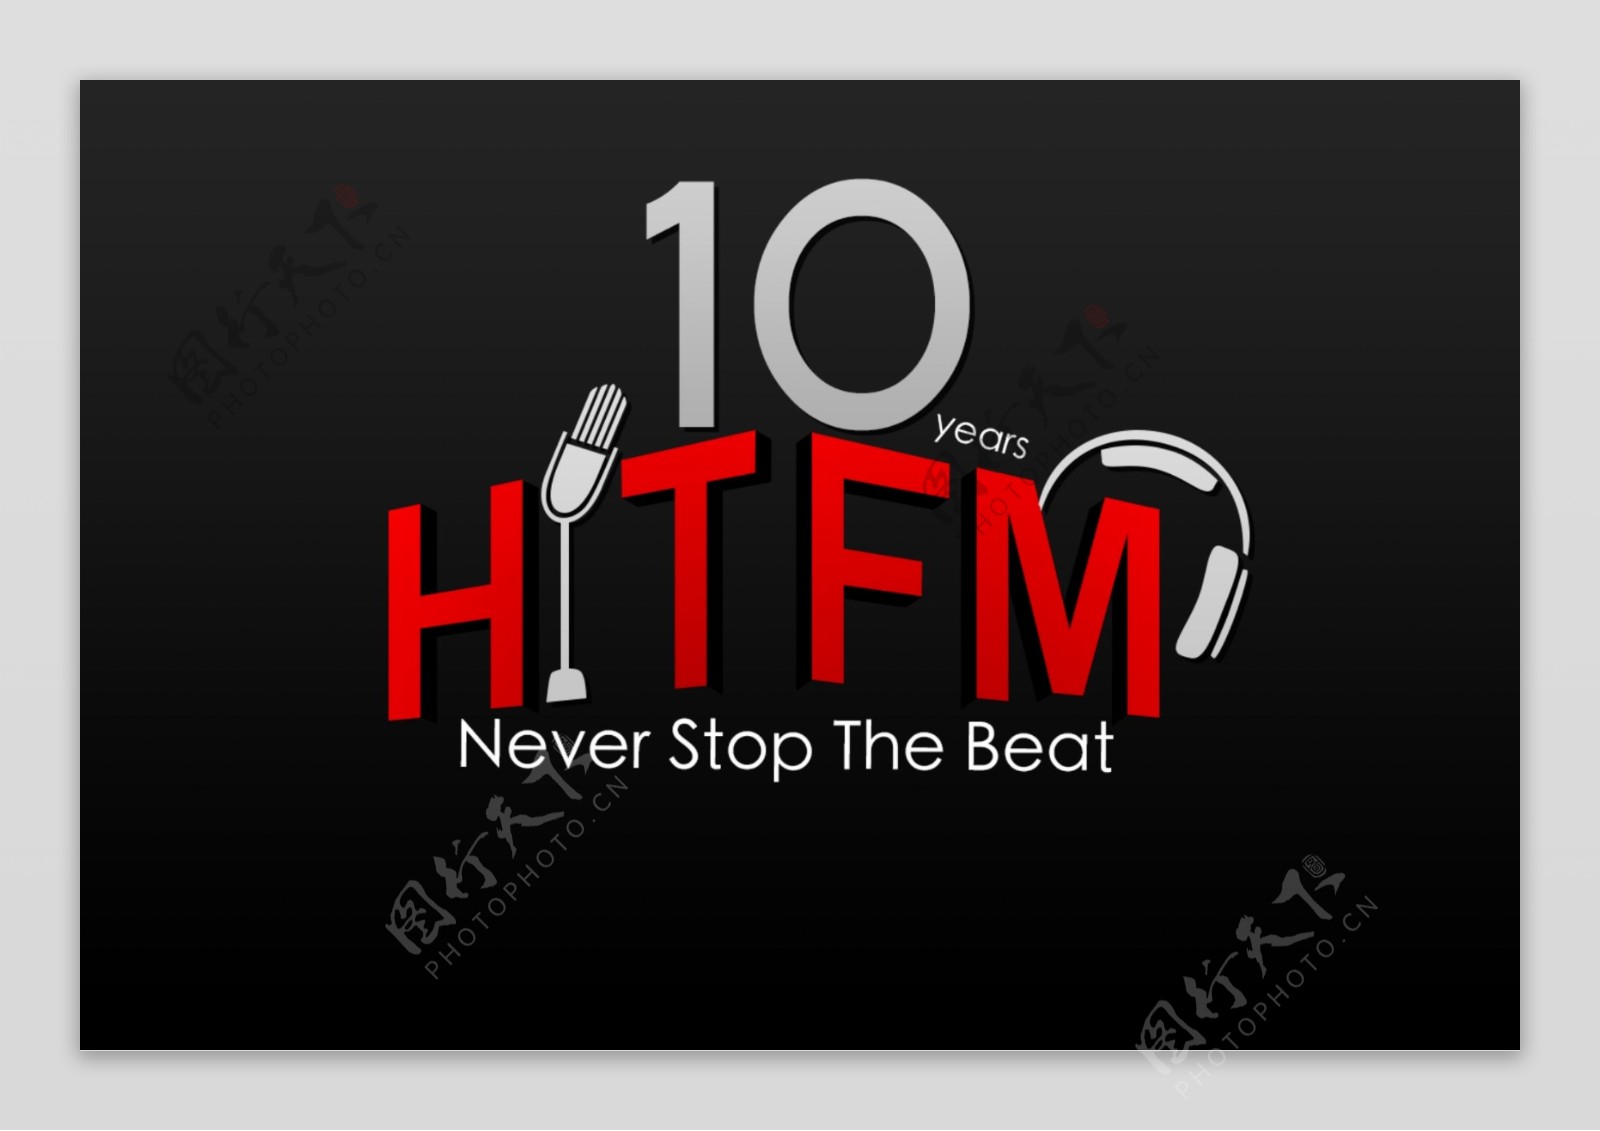 hitfm10周年logo设